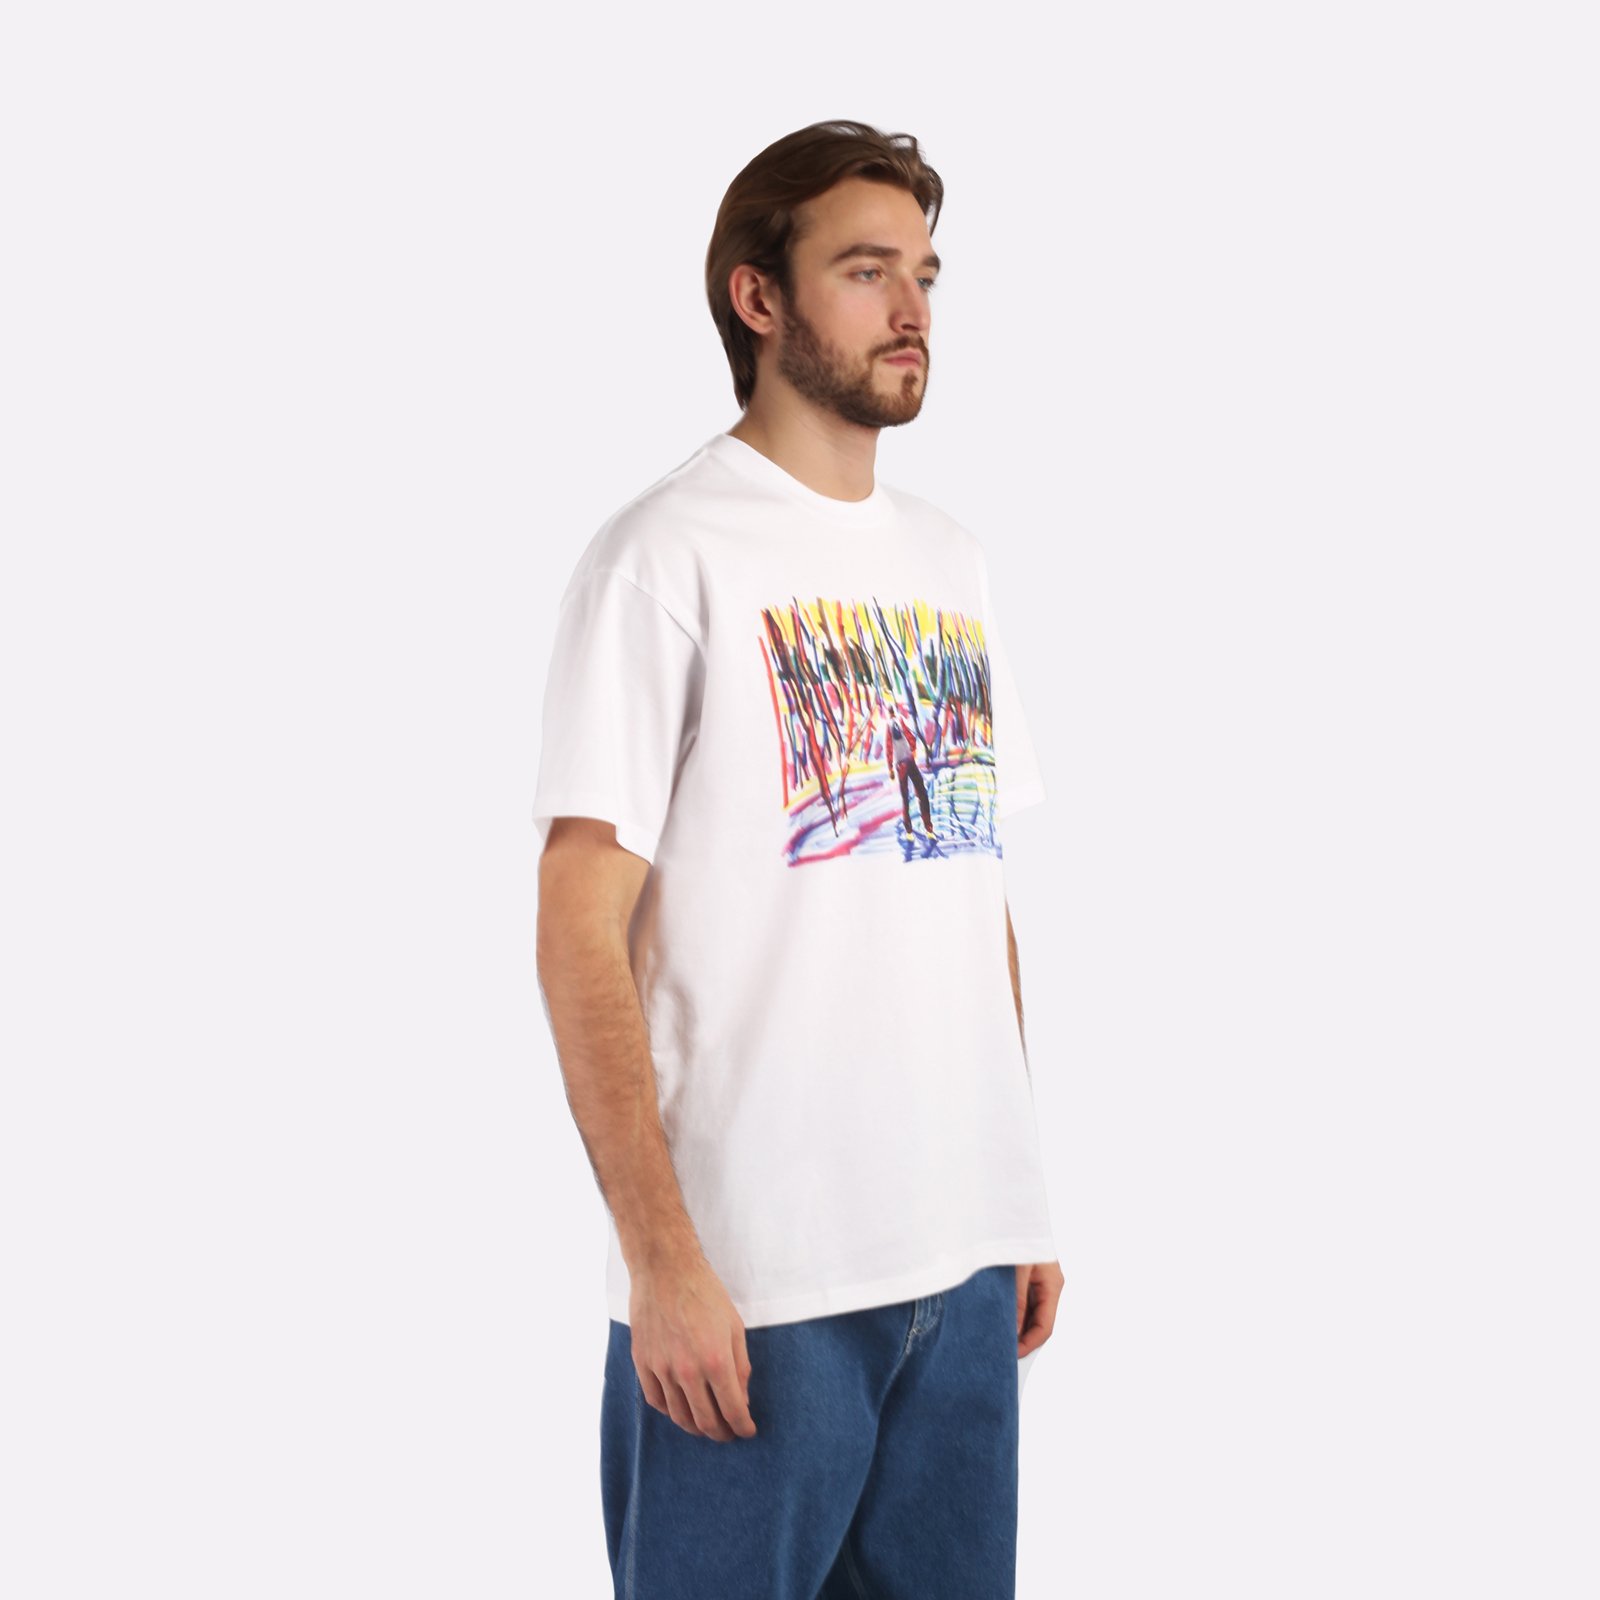 мужская футболка Carhartt WIP S/S Ollie Mac Icy Lake T-S  (I032408-white) I032408-white - цена, описание, фото 3